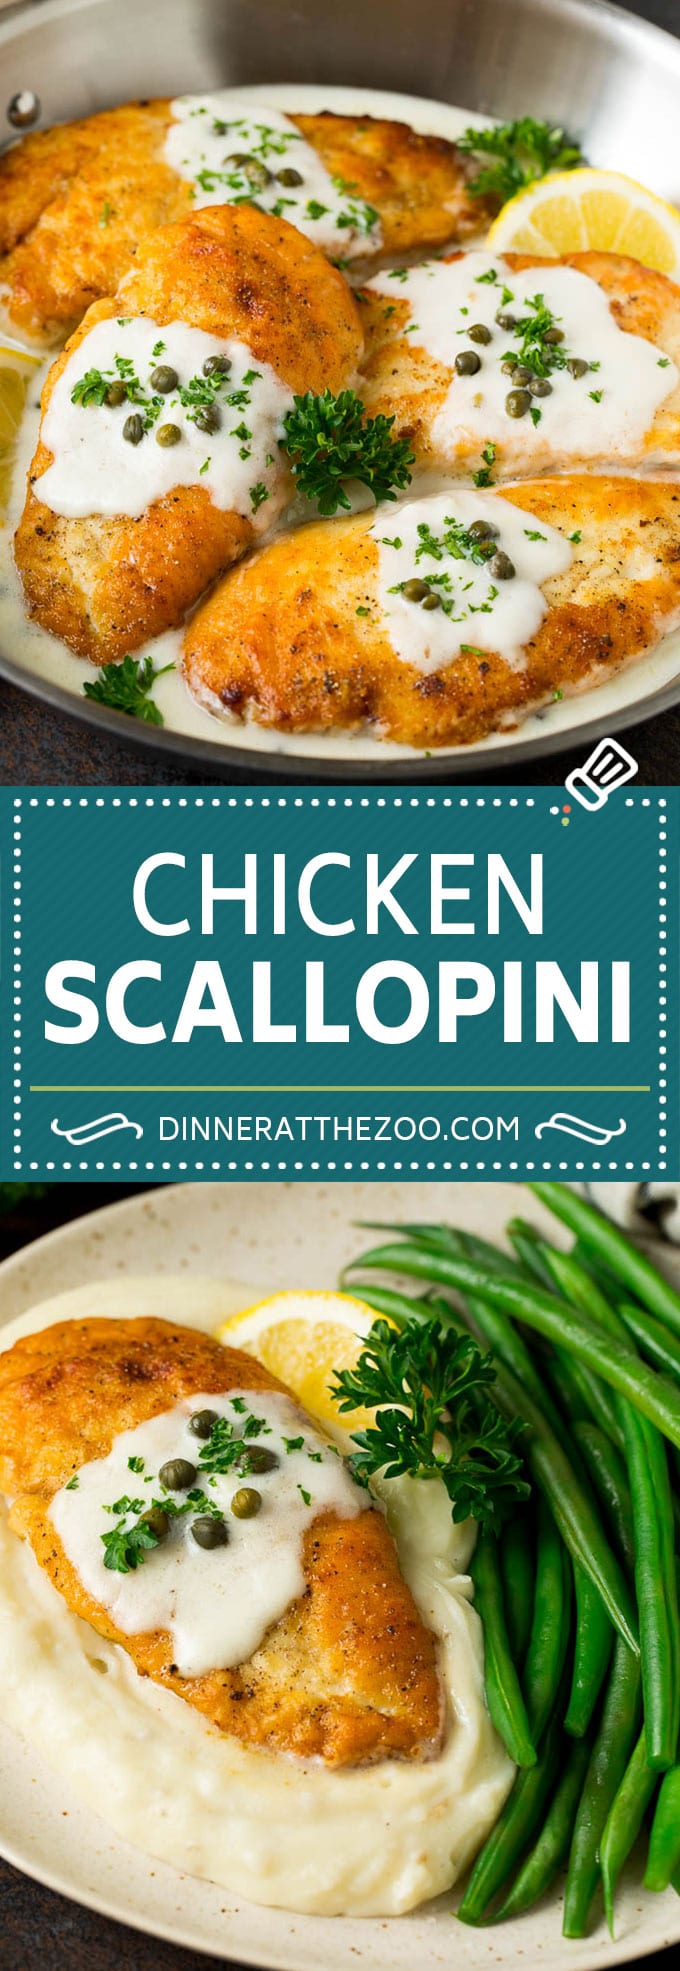 Chicken Scallopini Recipe #chicken #chickenbreast #dinner #dinneratthezoo